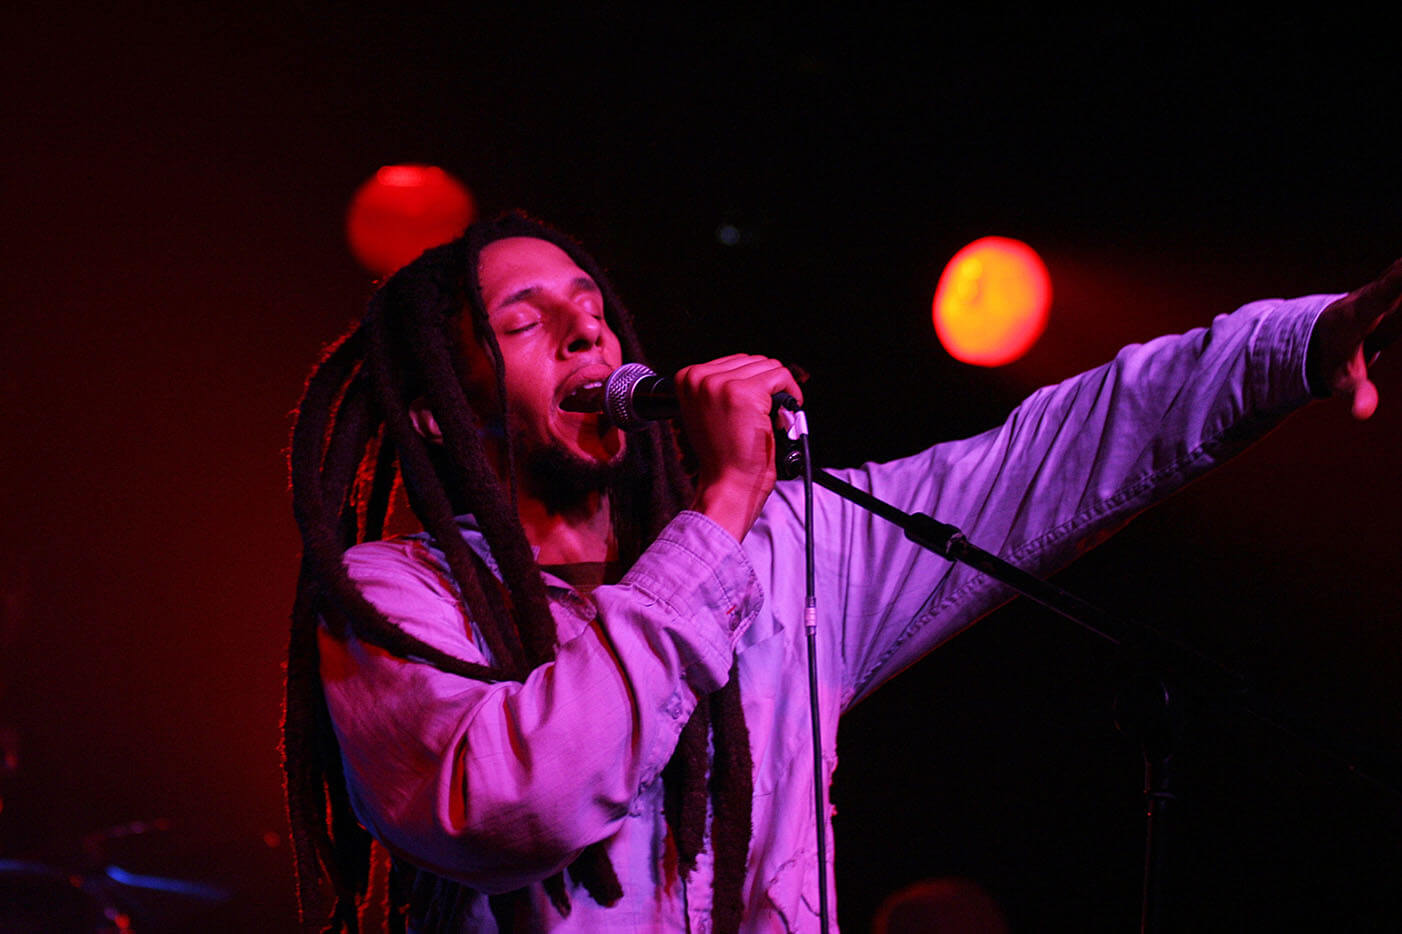 Julian Marley - By Chris Christoforou - High Res Web Image